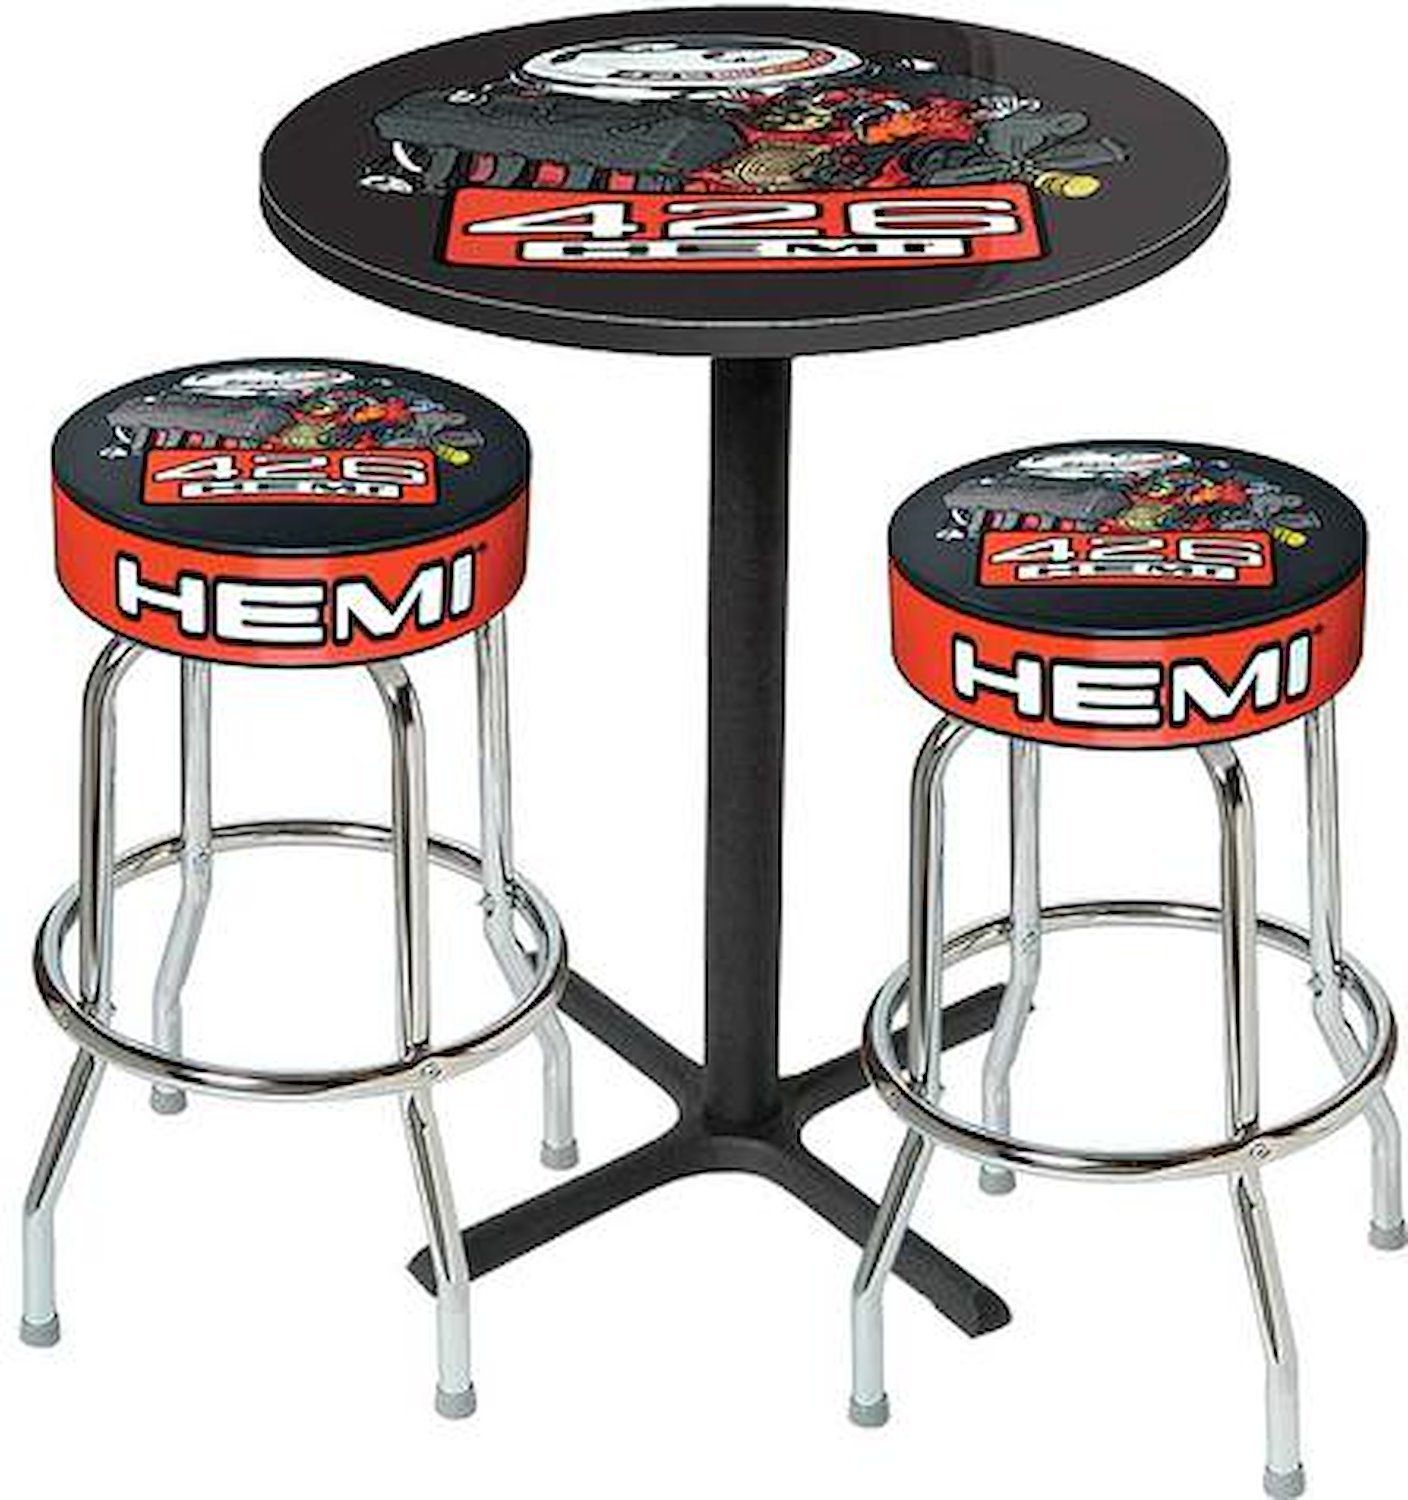 MD67513 Table & Stool Set; Mopar 426 Hemi Logo; Black Based Table With Chrome Stools (3-Pc); Style 13